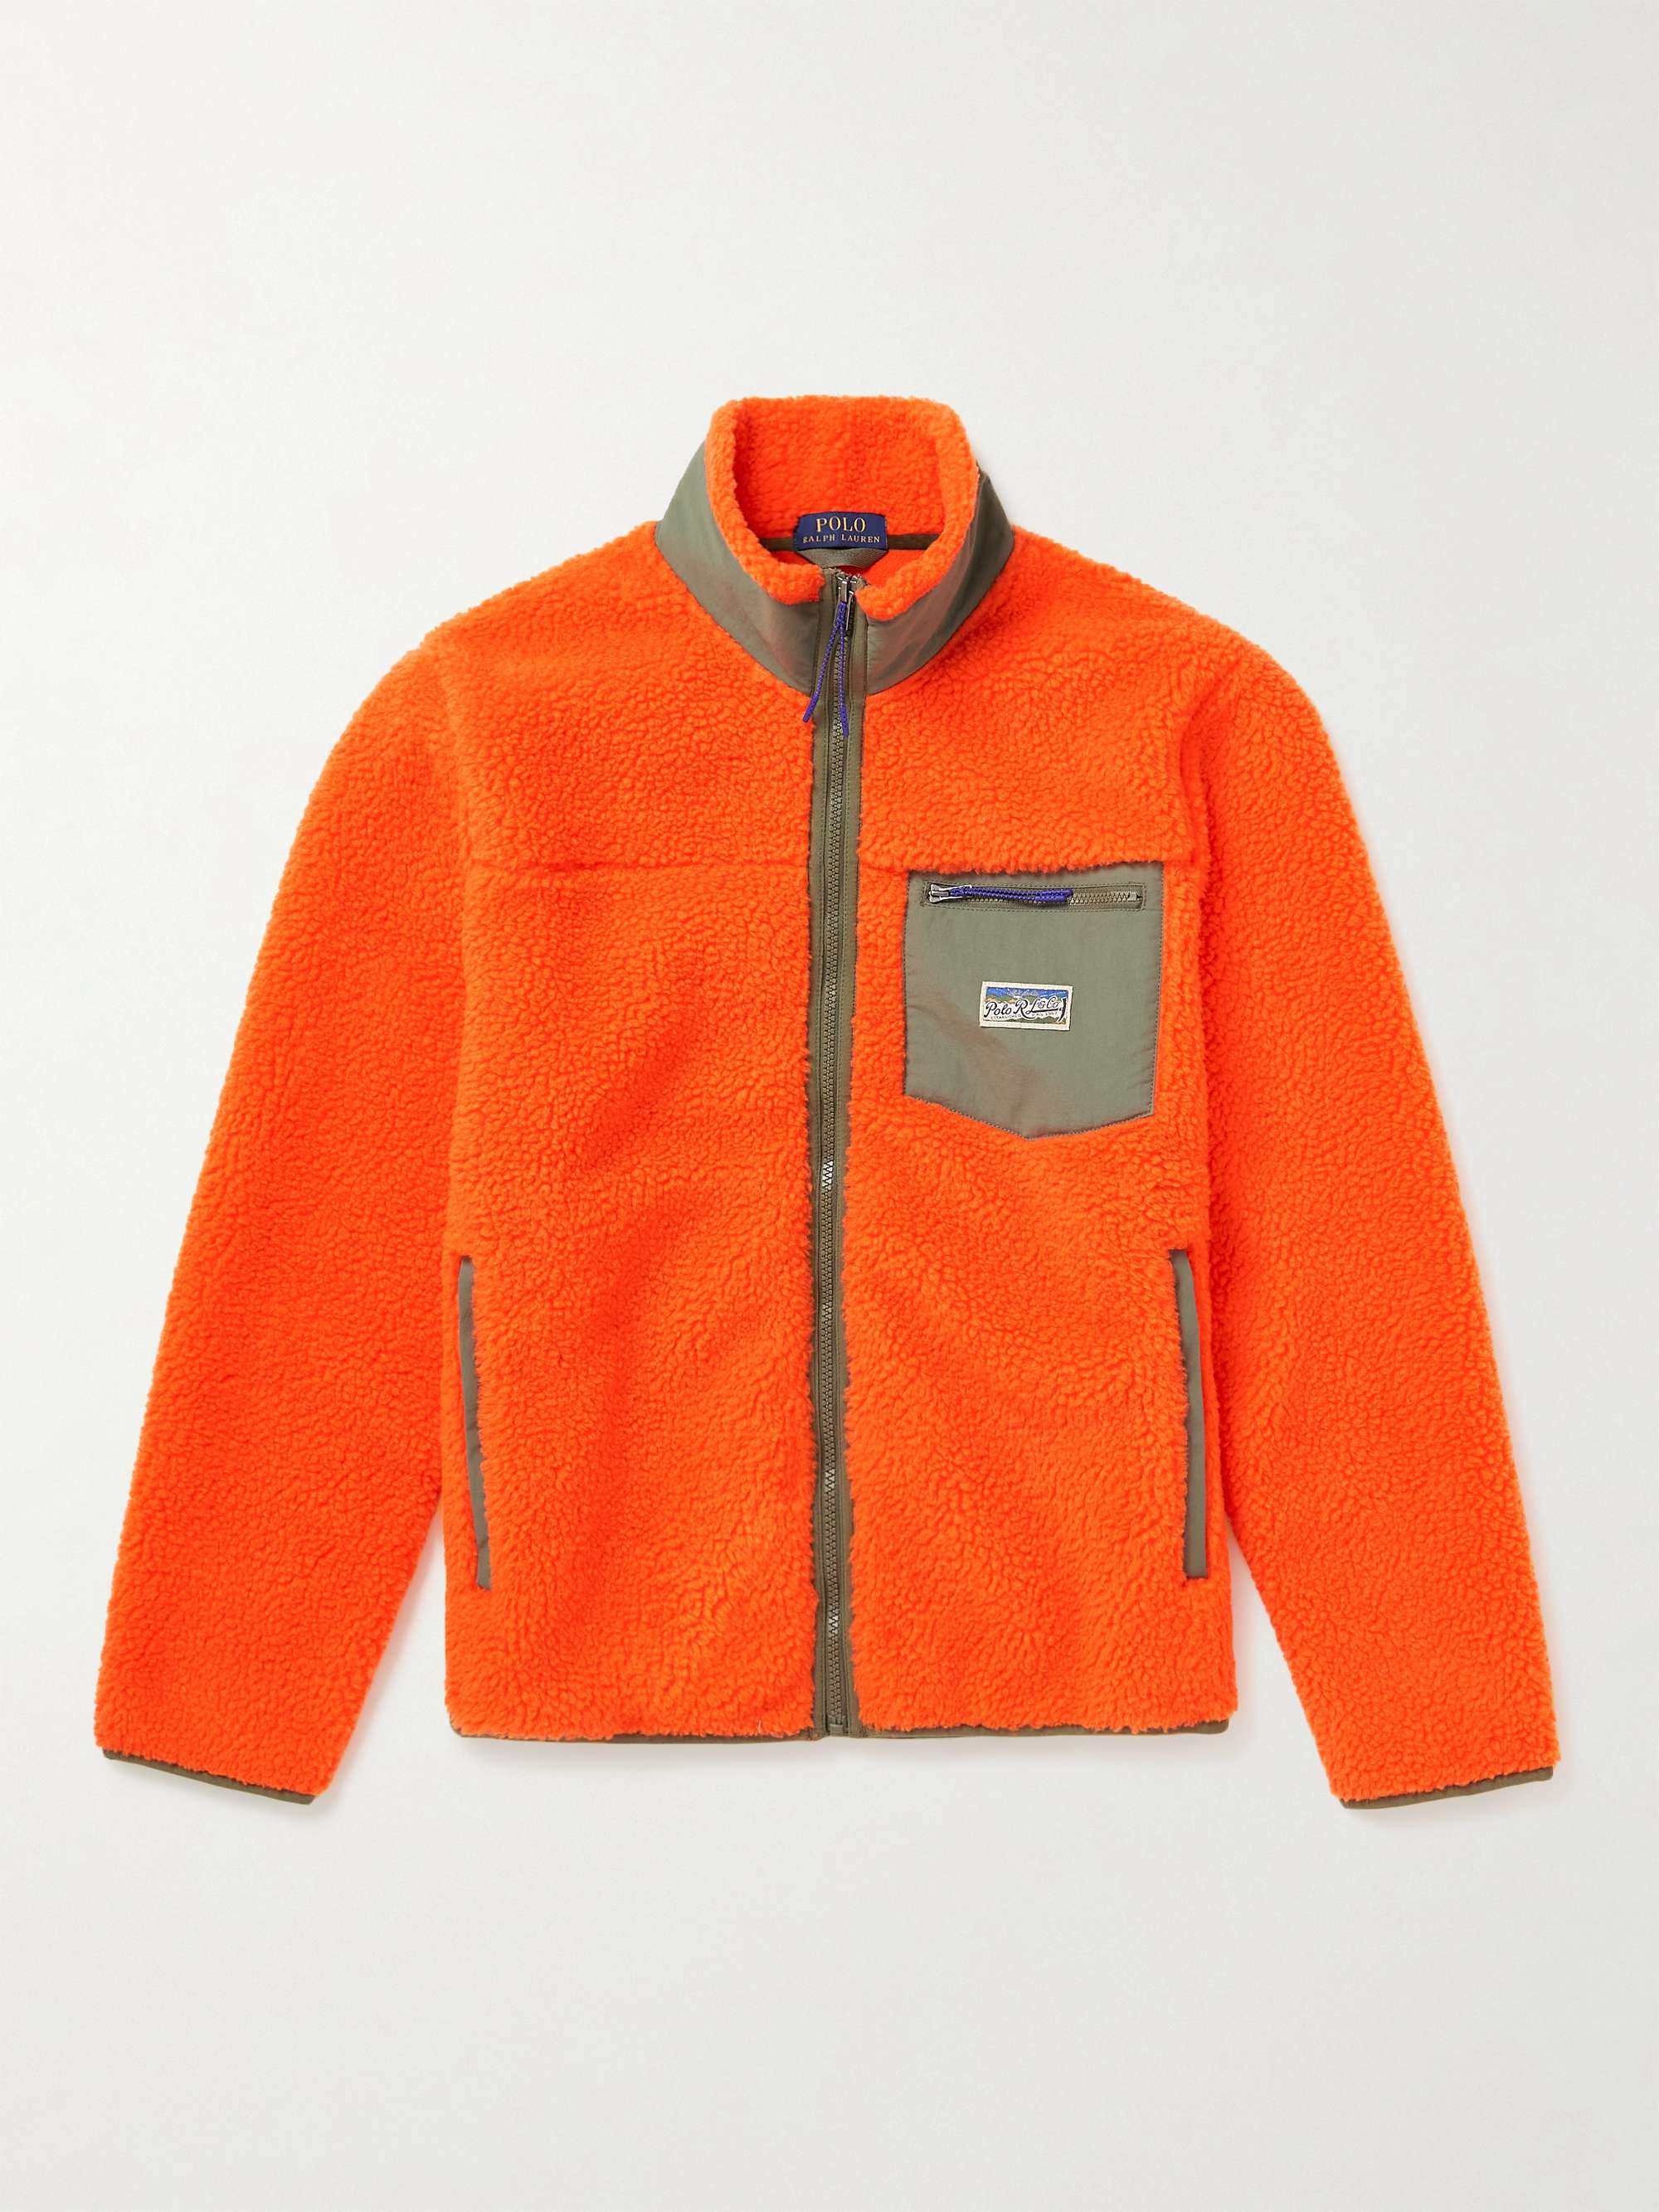 POLO RALPH LAUREN Logo-Appliqued Shell-Trimmed Fleece Jacket,Orange